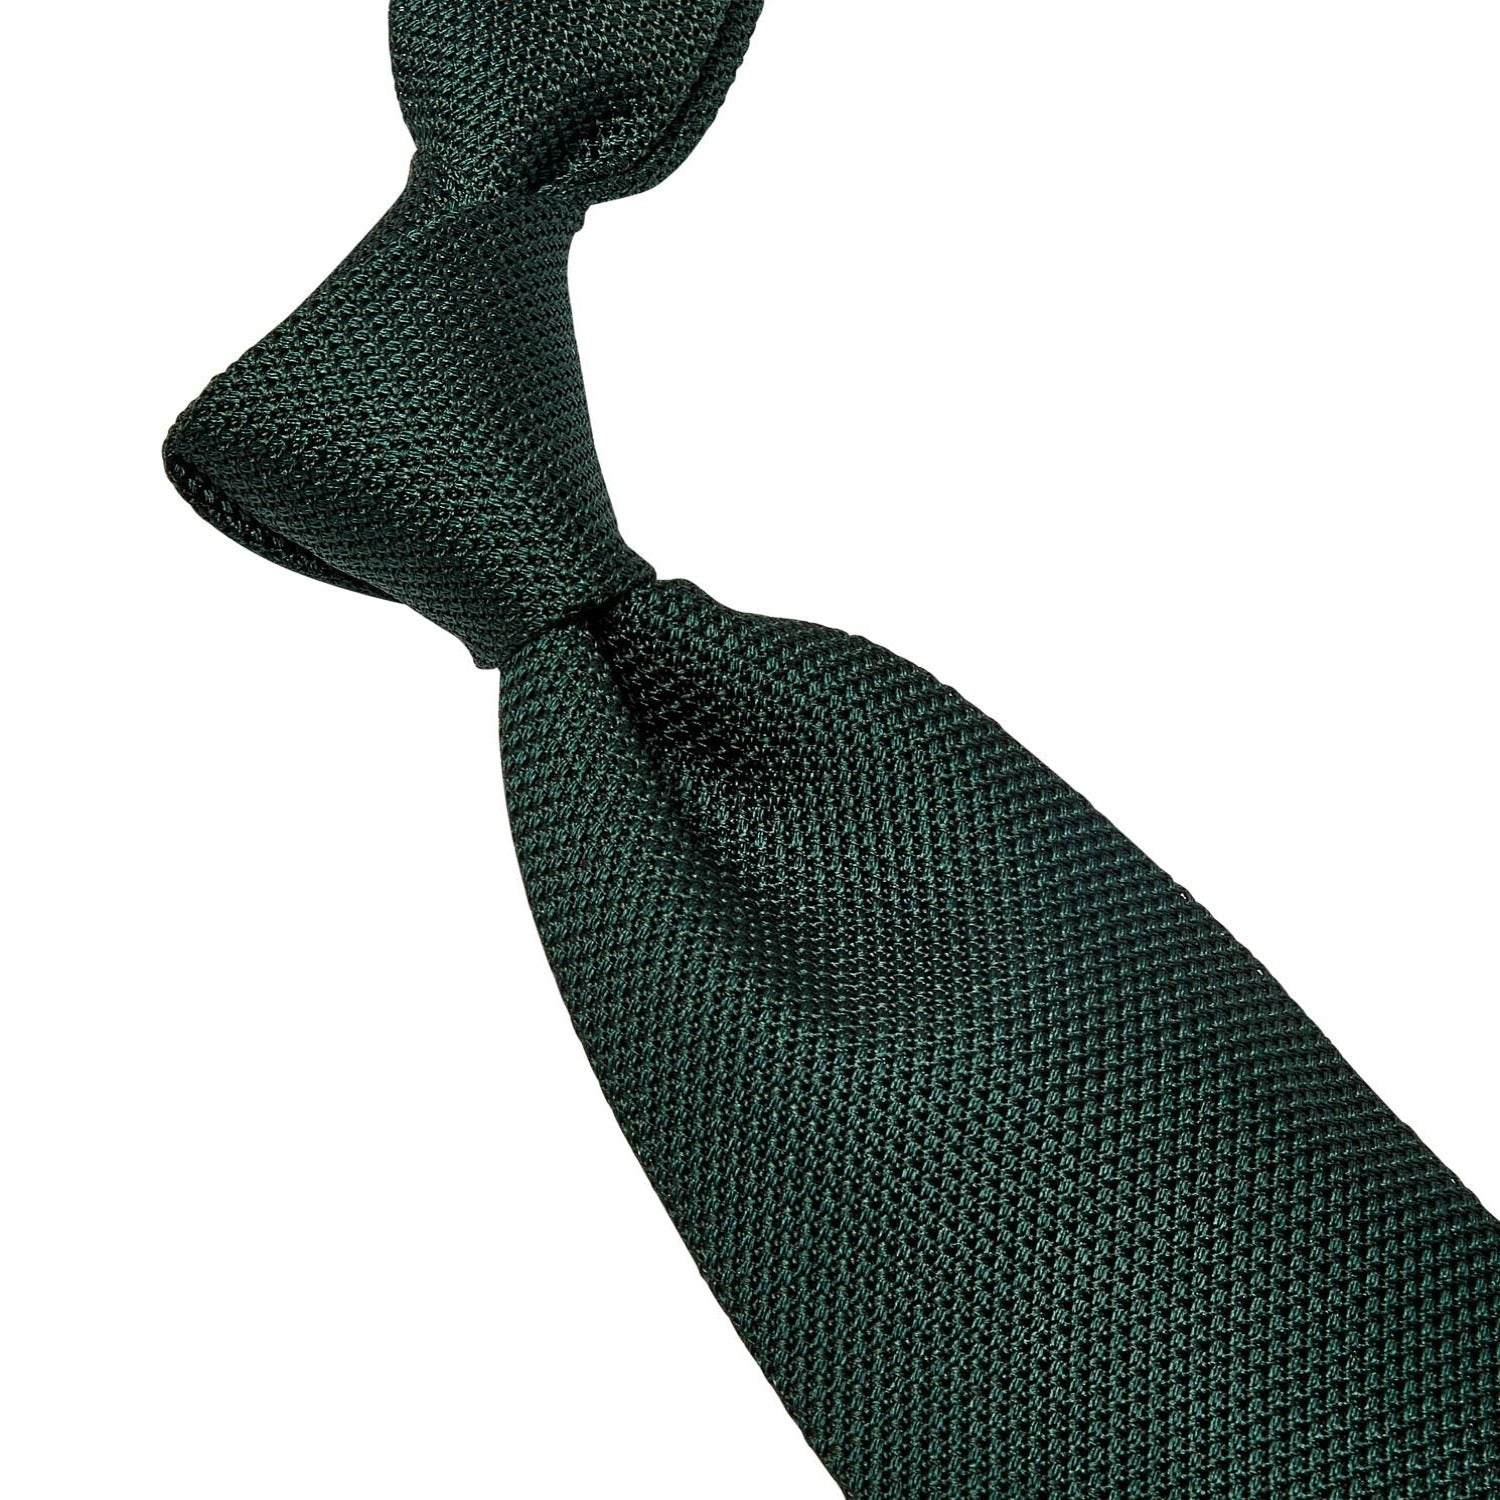 A Sovereign Grade Grenadine Fina Emerald Tie handmade in the United Kingdom by KirbyAllison.com.